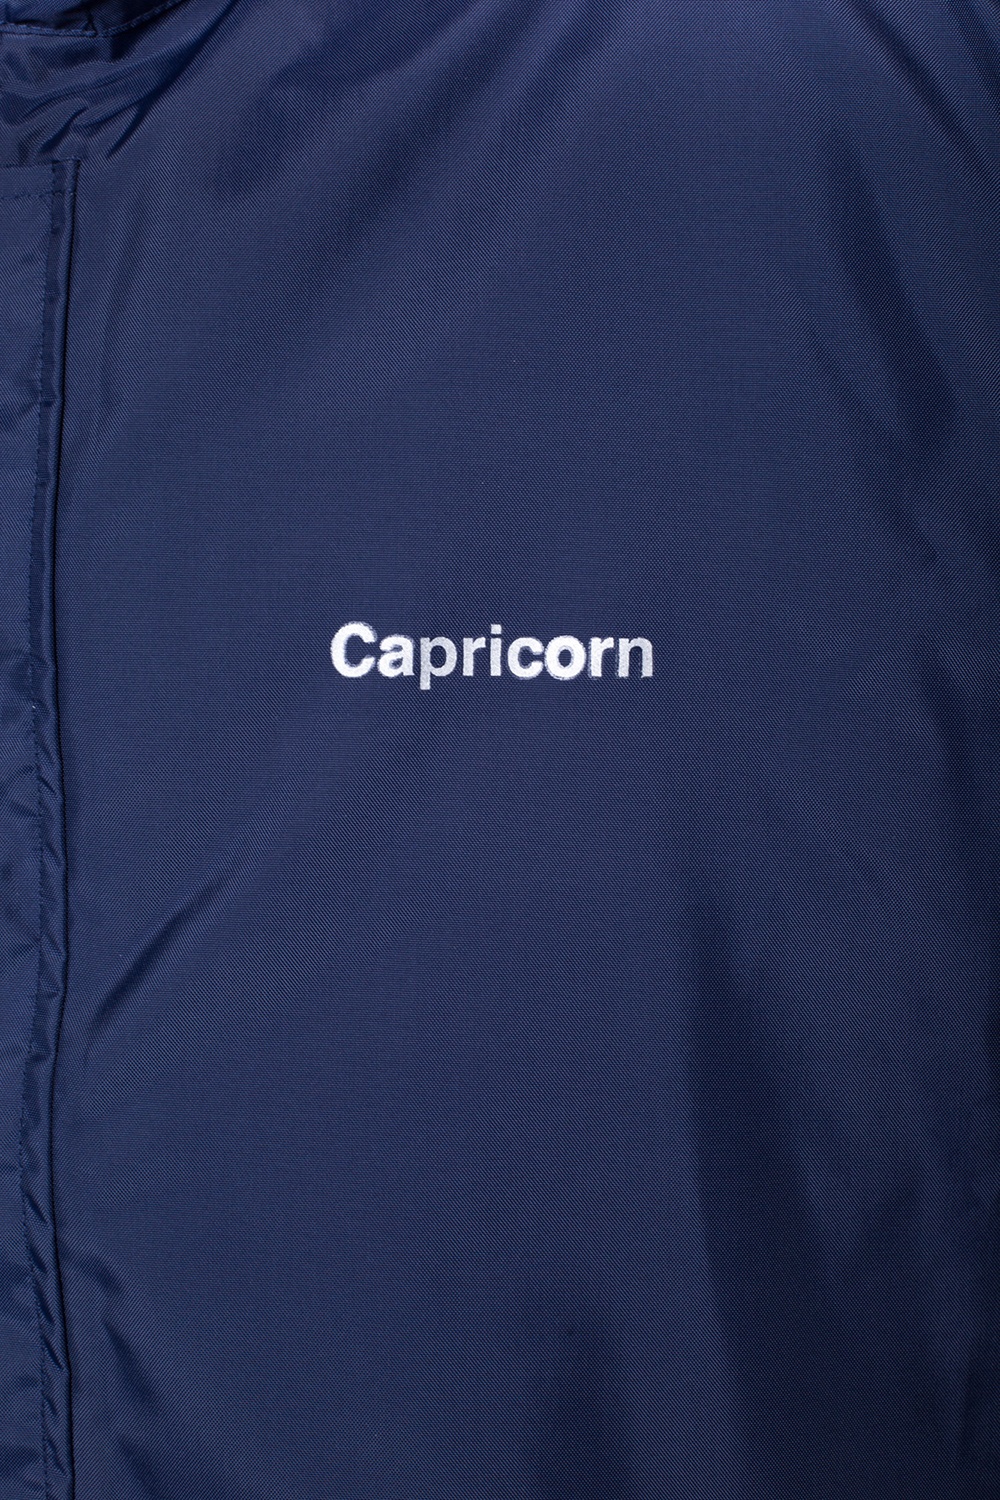 Navy blue Capricorn horoscope motif raincoat VETEMENTS - Vitkac Italy